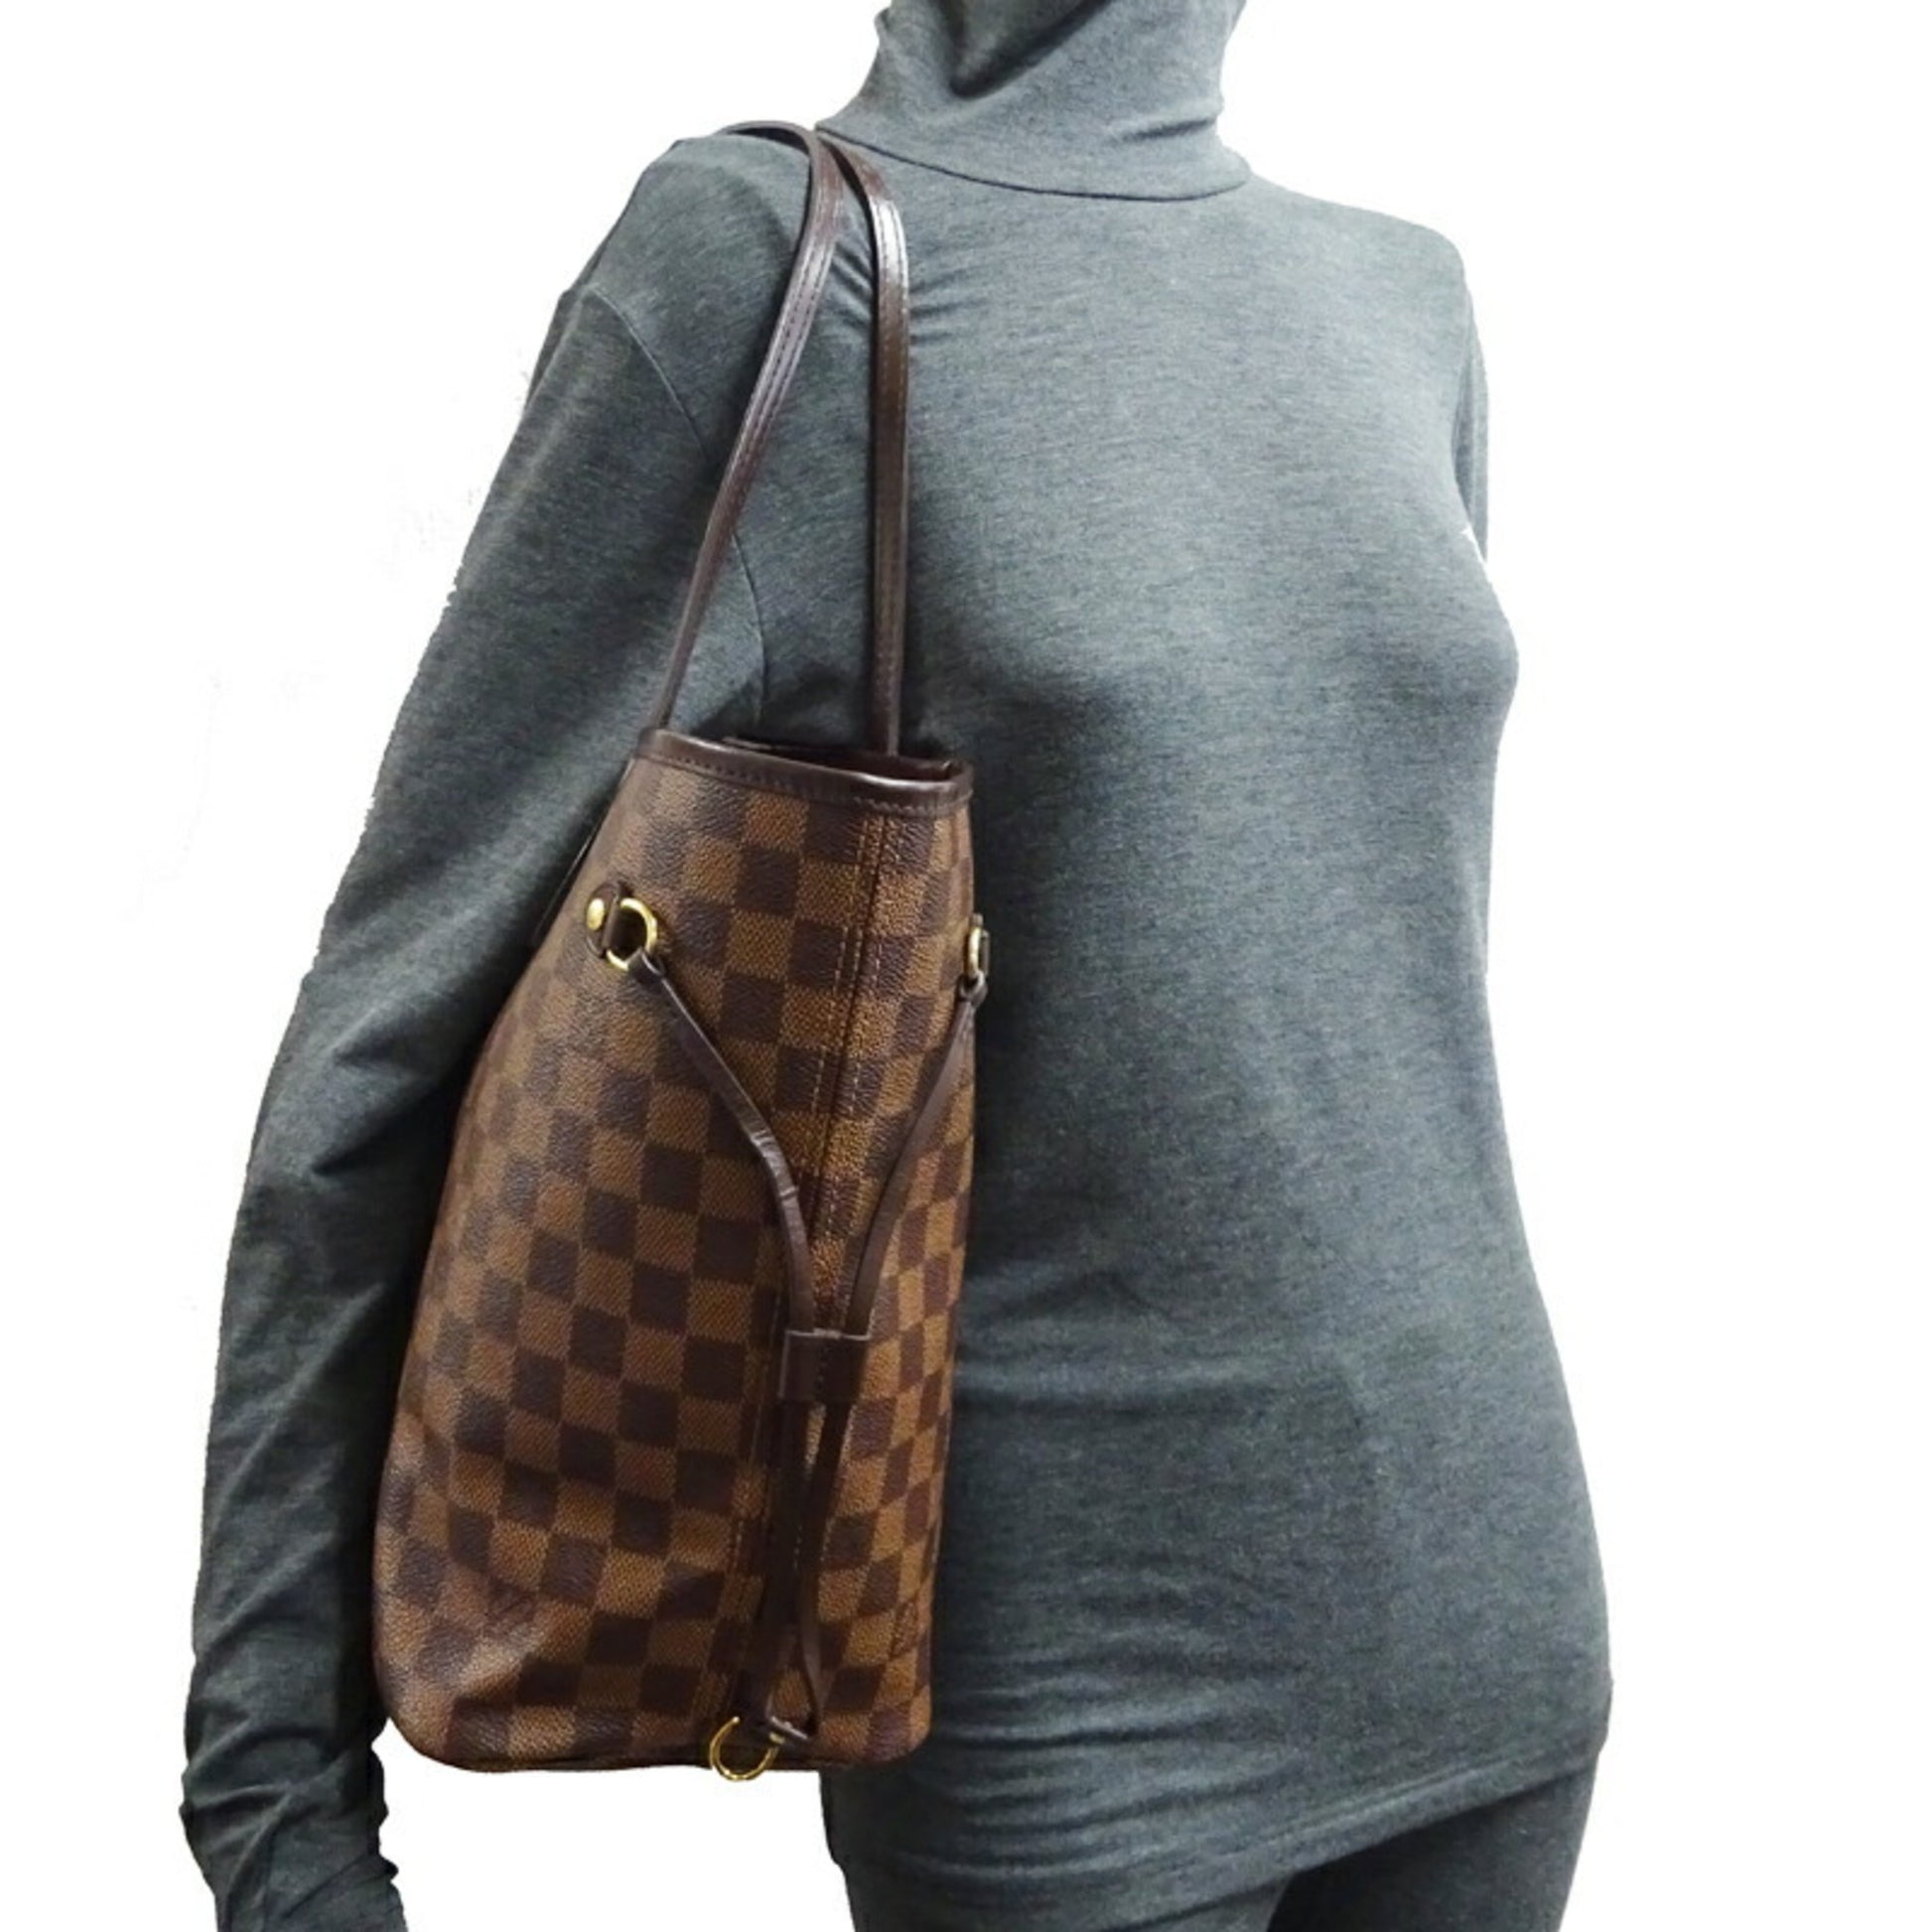 Louis Vuitton Tote Bag Neverfull MM Damier Ebene N41358 Threes Ladies